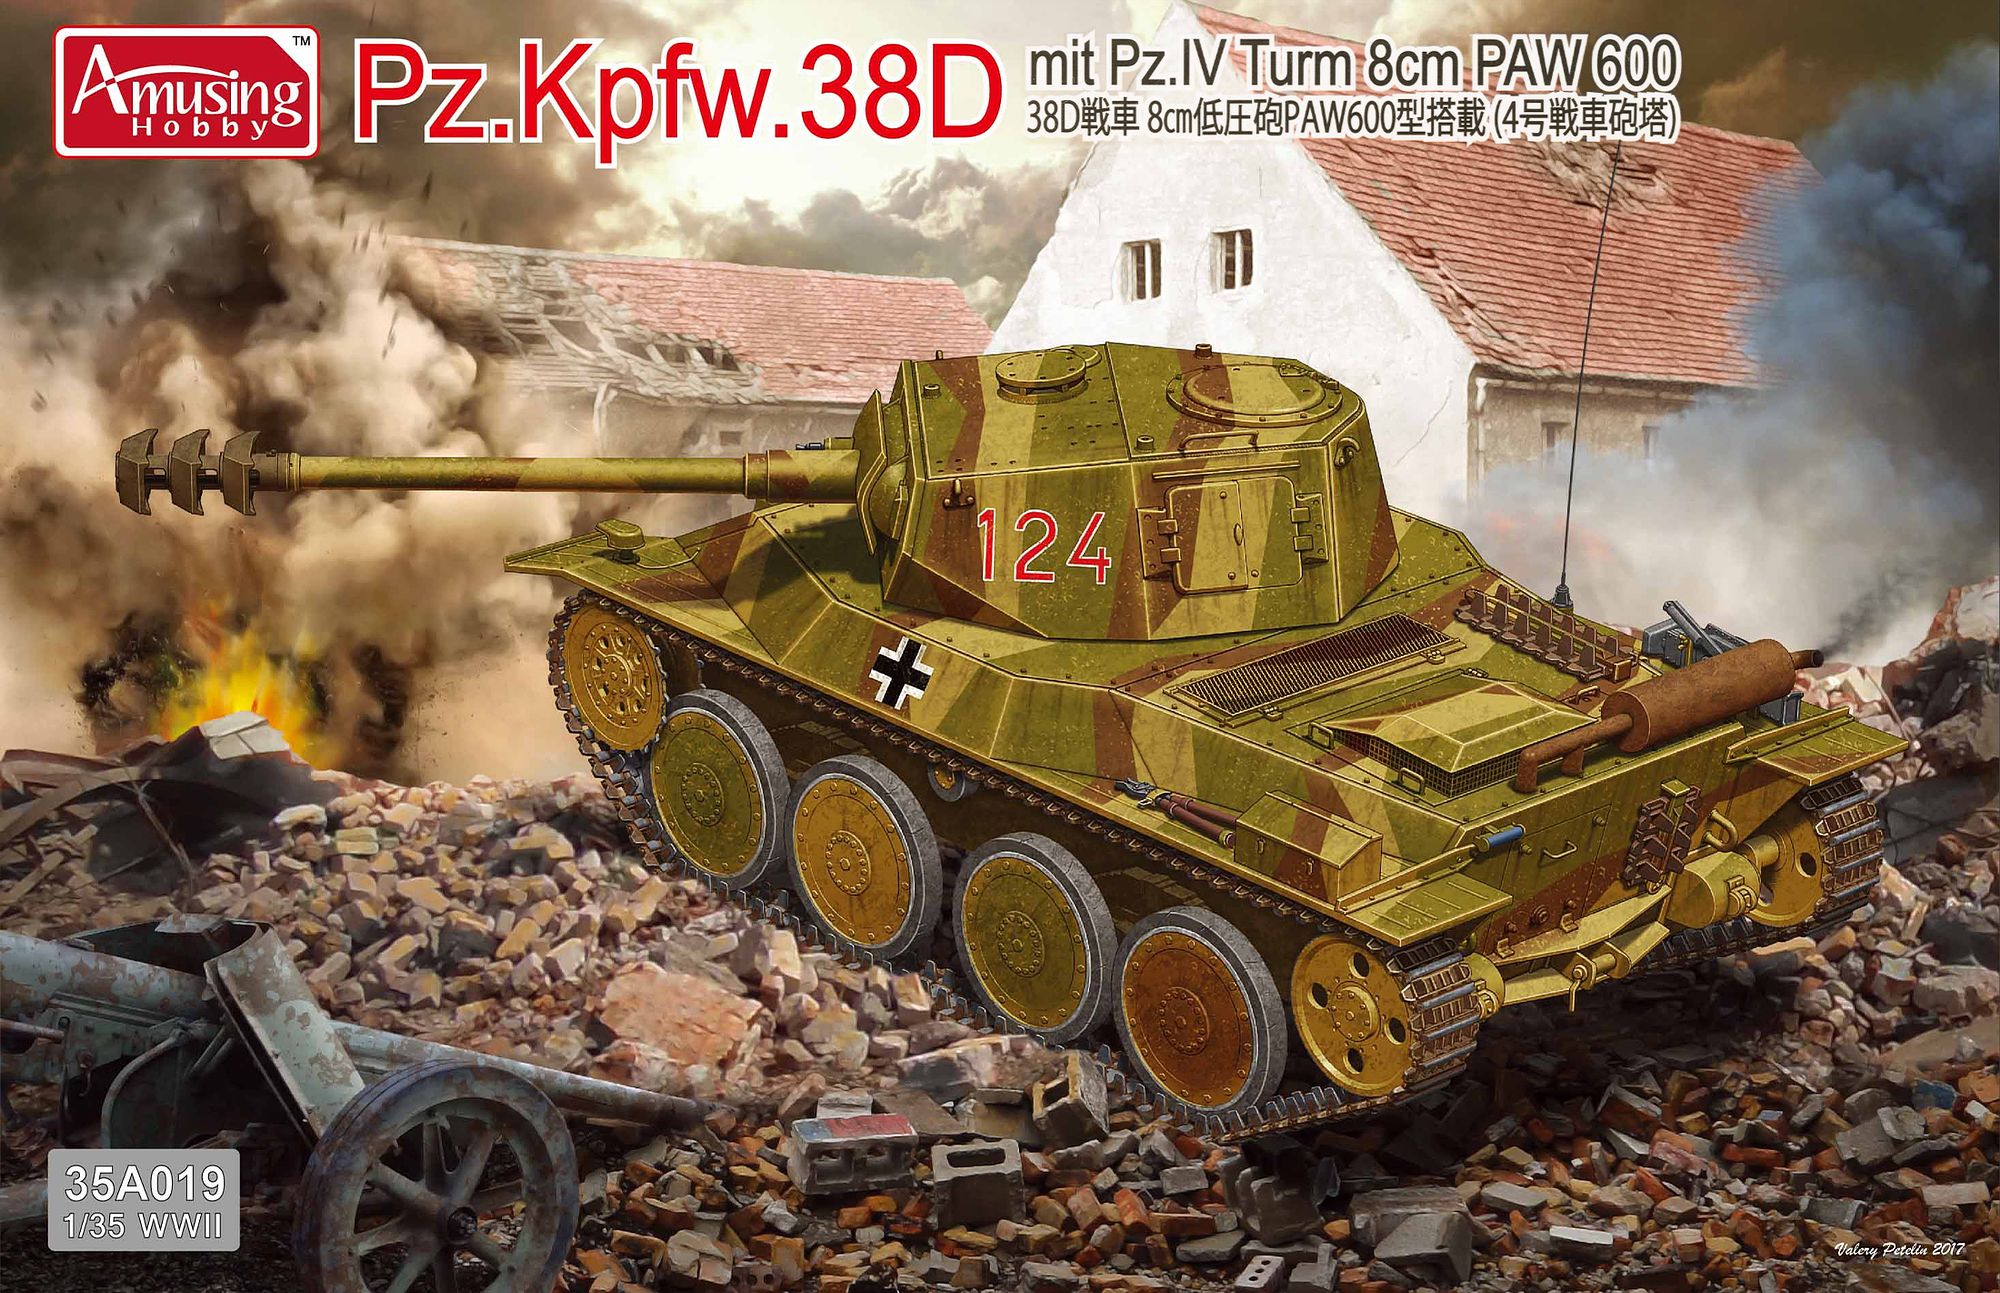 AMH35A019 アミュージングホビー 1/35 ドイツ38D戦車8cm低圧砲PAW600型搭載(4号戦車砲塔)